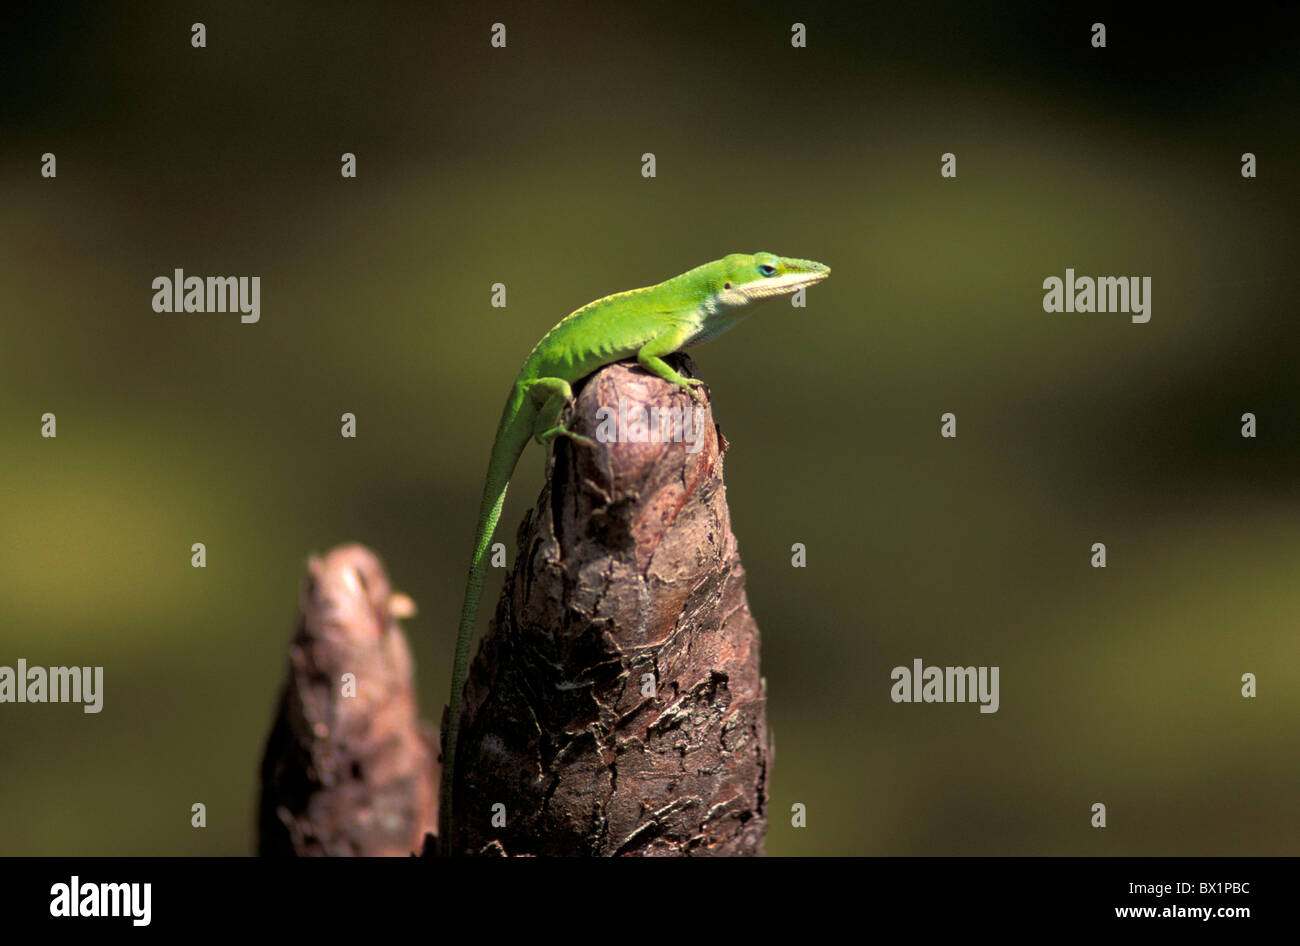 Tier Tiere grün Louisiana Reptilien Saurier USA Amerika Vereinigte Staaten Stockfoto